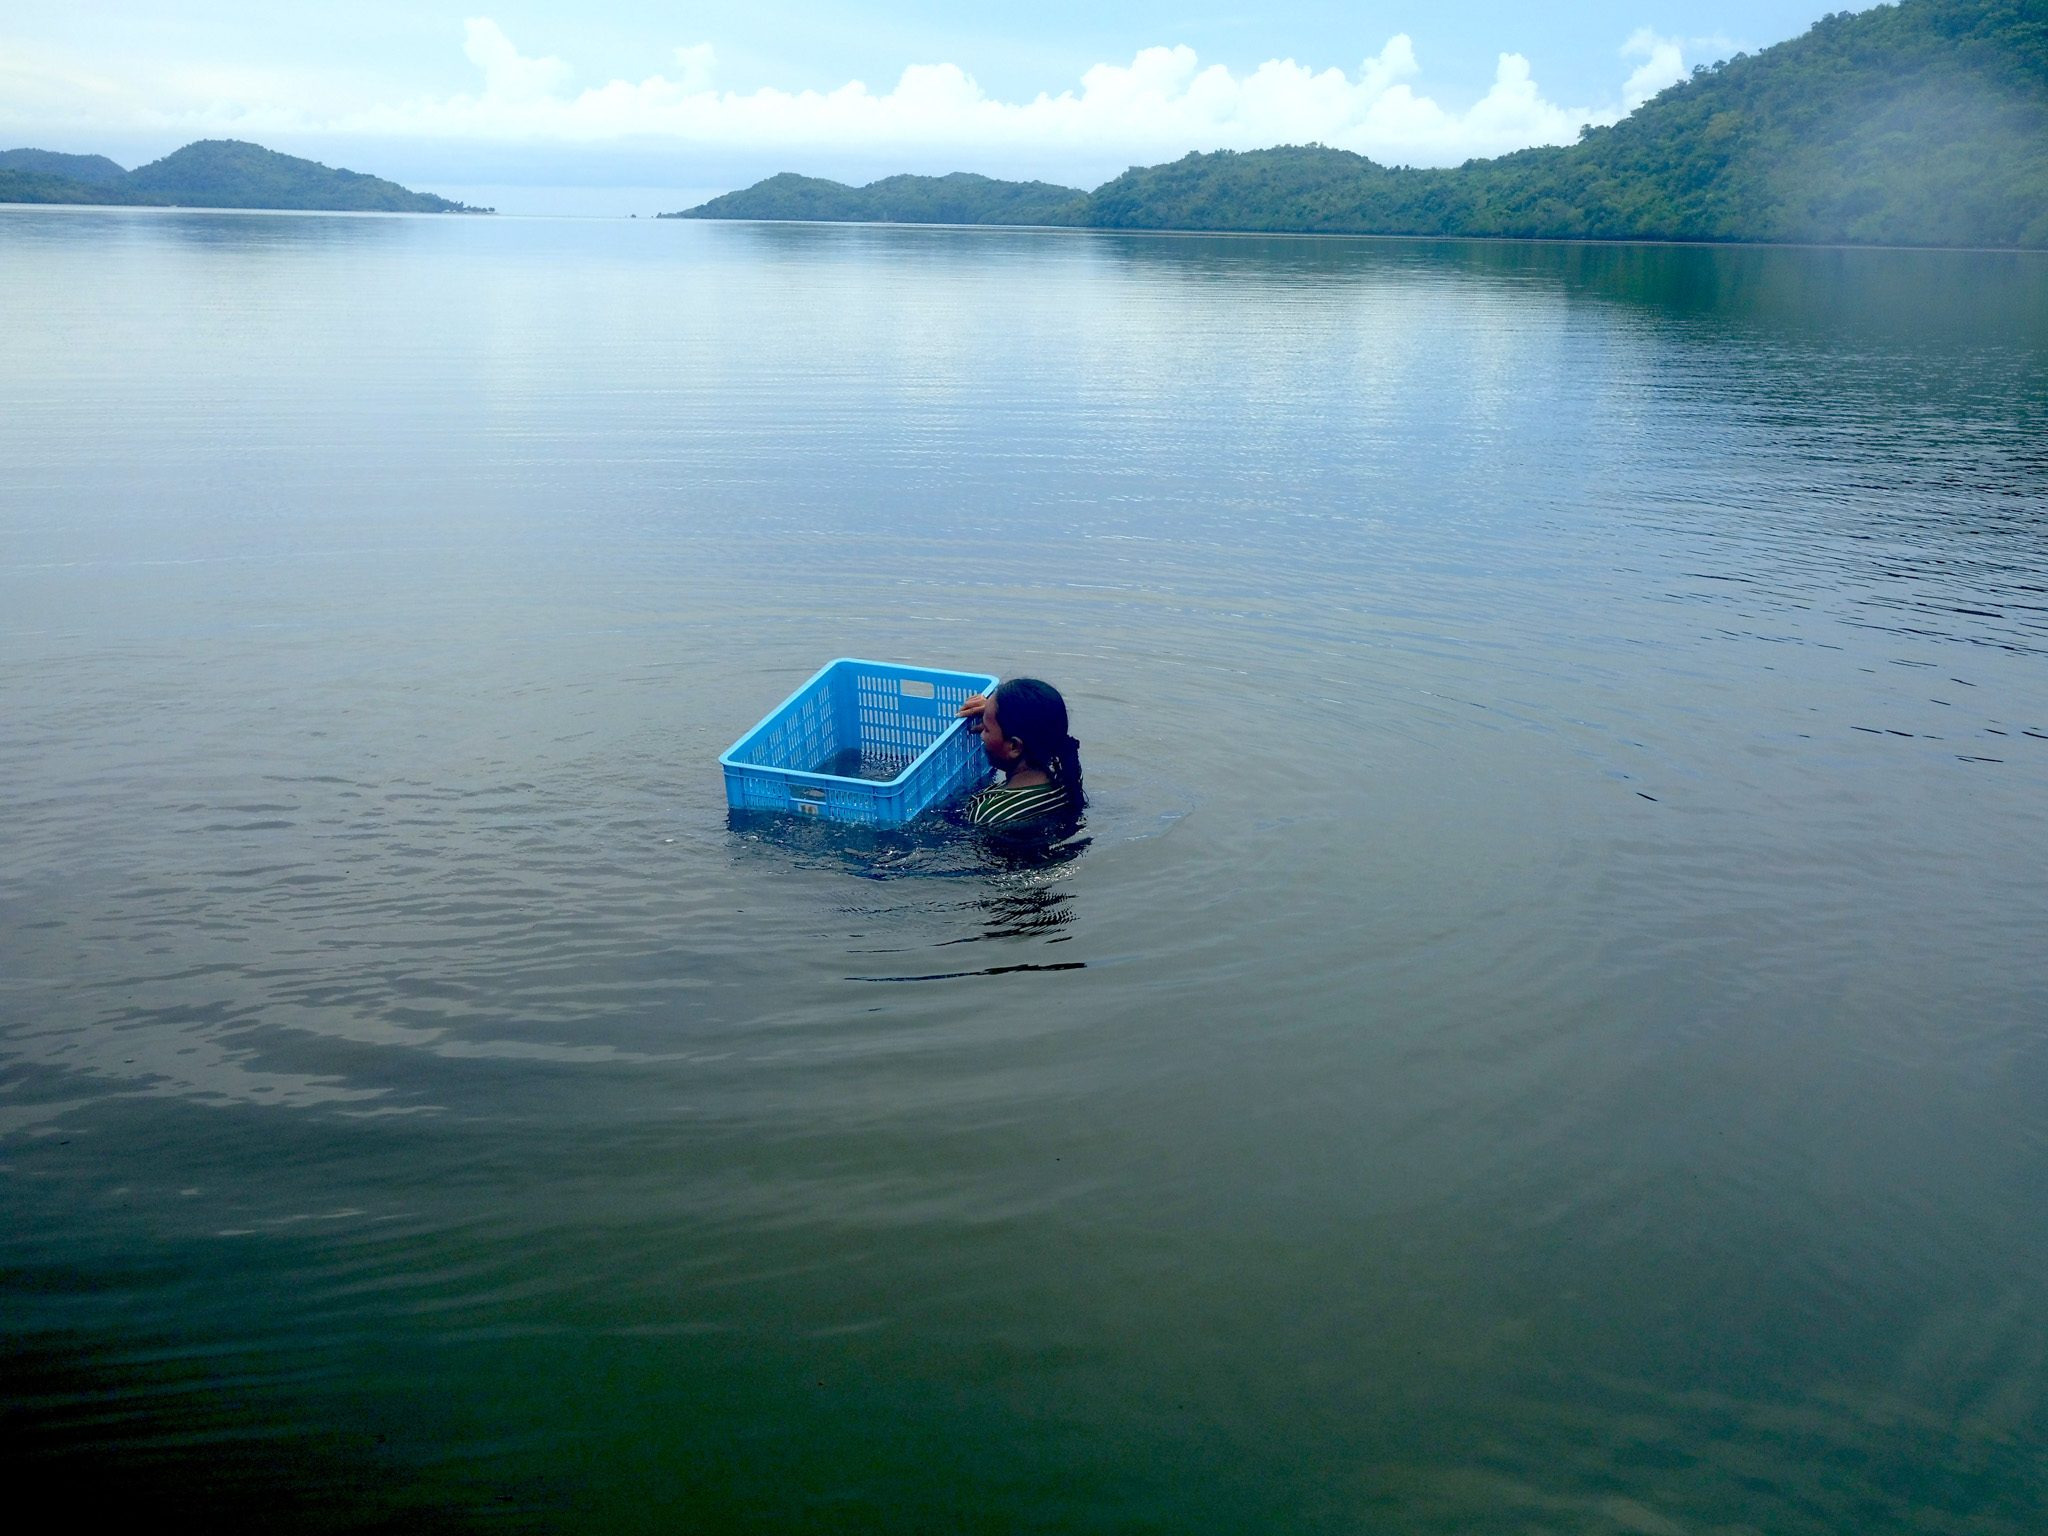 Tagbanua women transform pandemic woes to marine protection work in Palawan